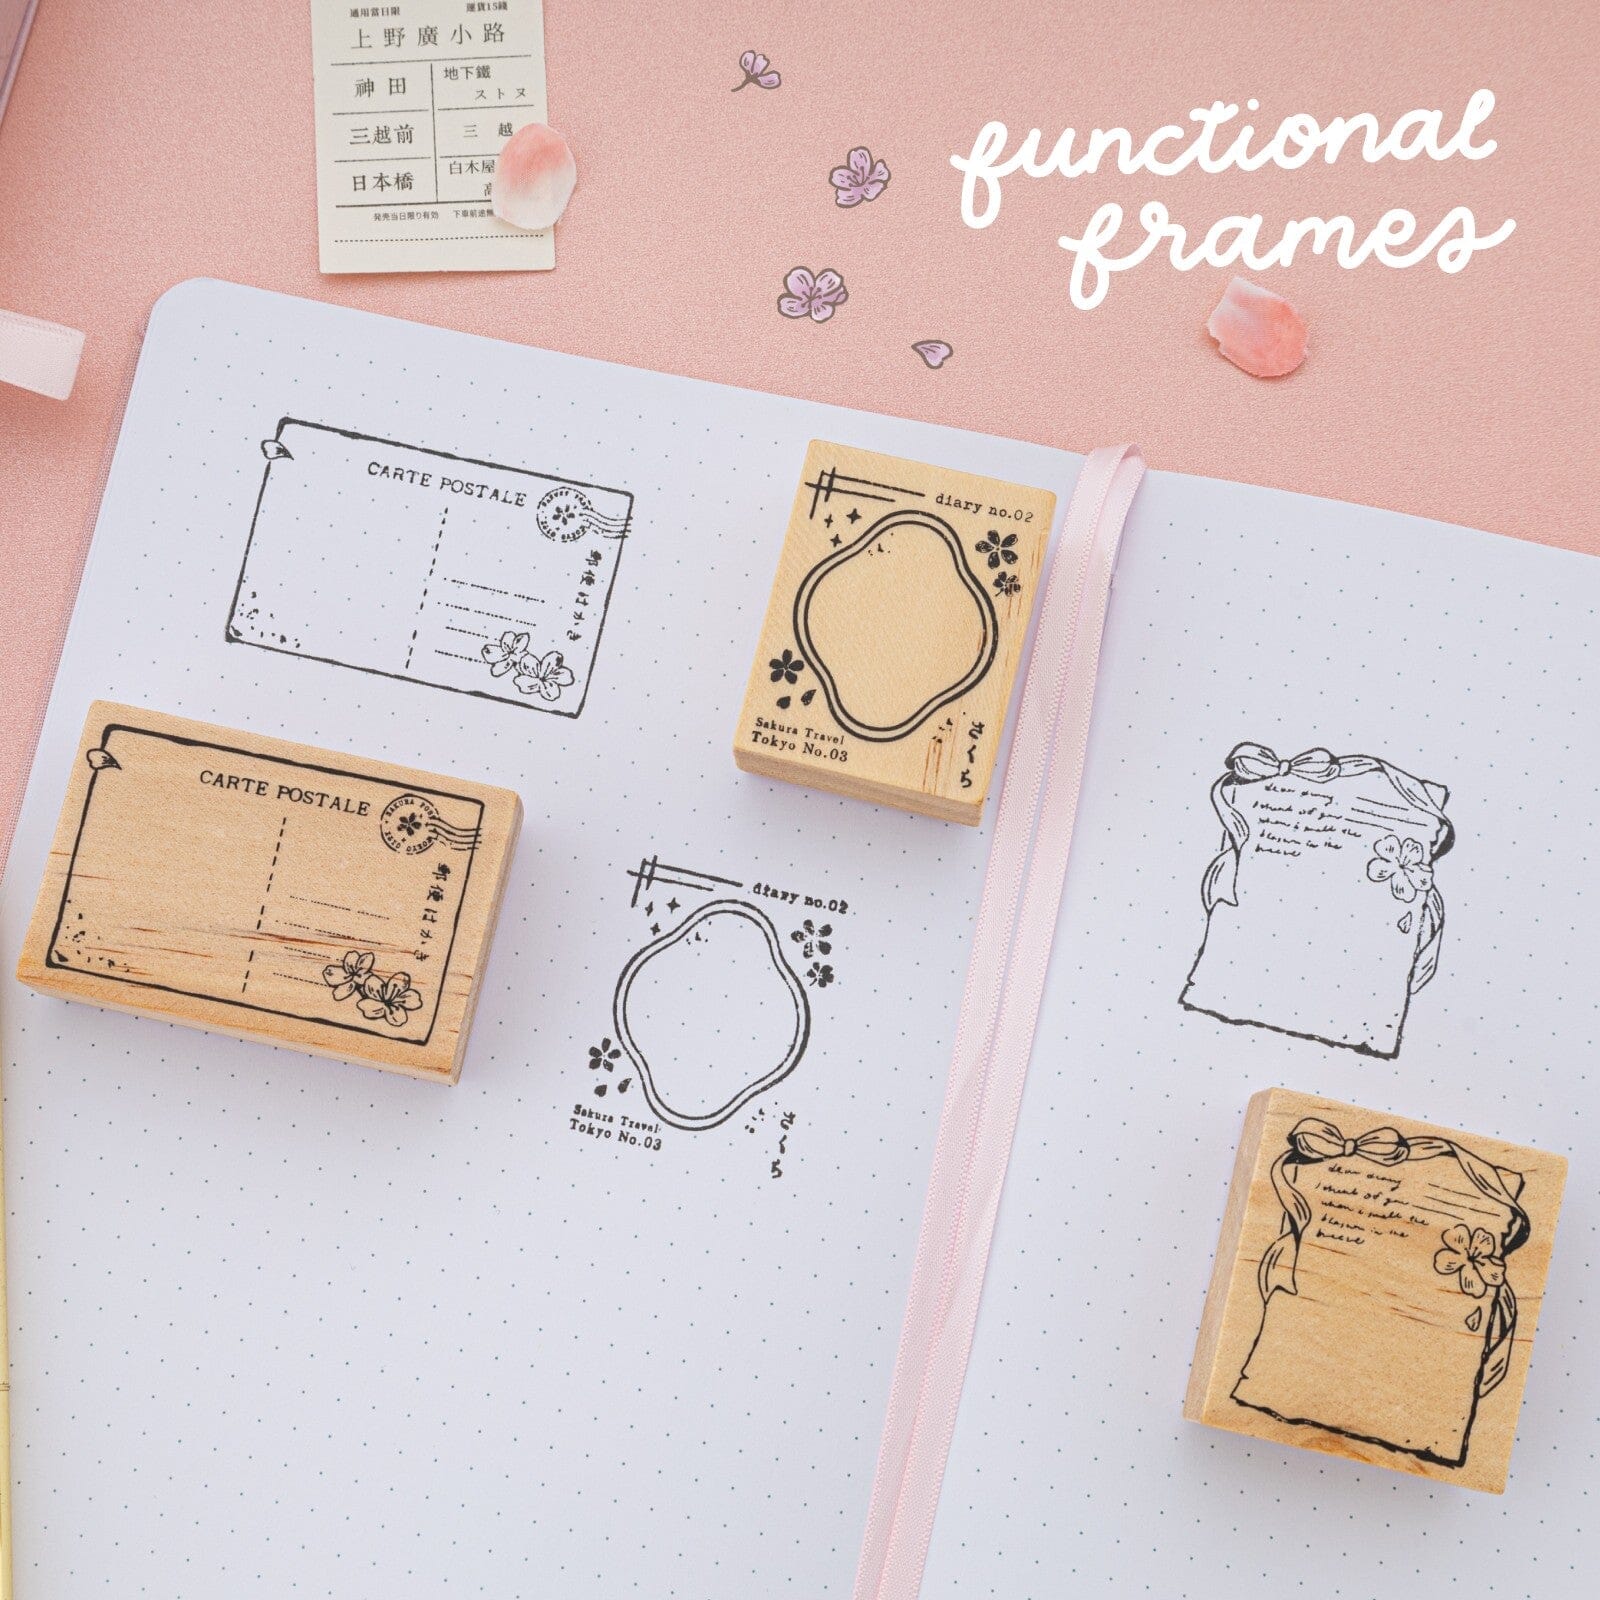 Tsuki 'Enchanted Garden' Bullet Journal Stamp Set ☾ – NotebookTherapy